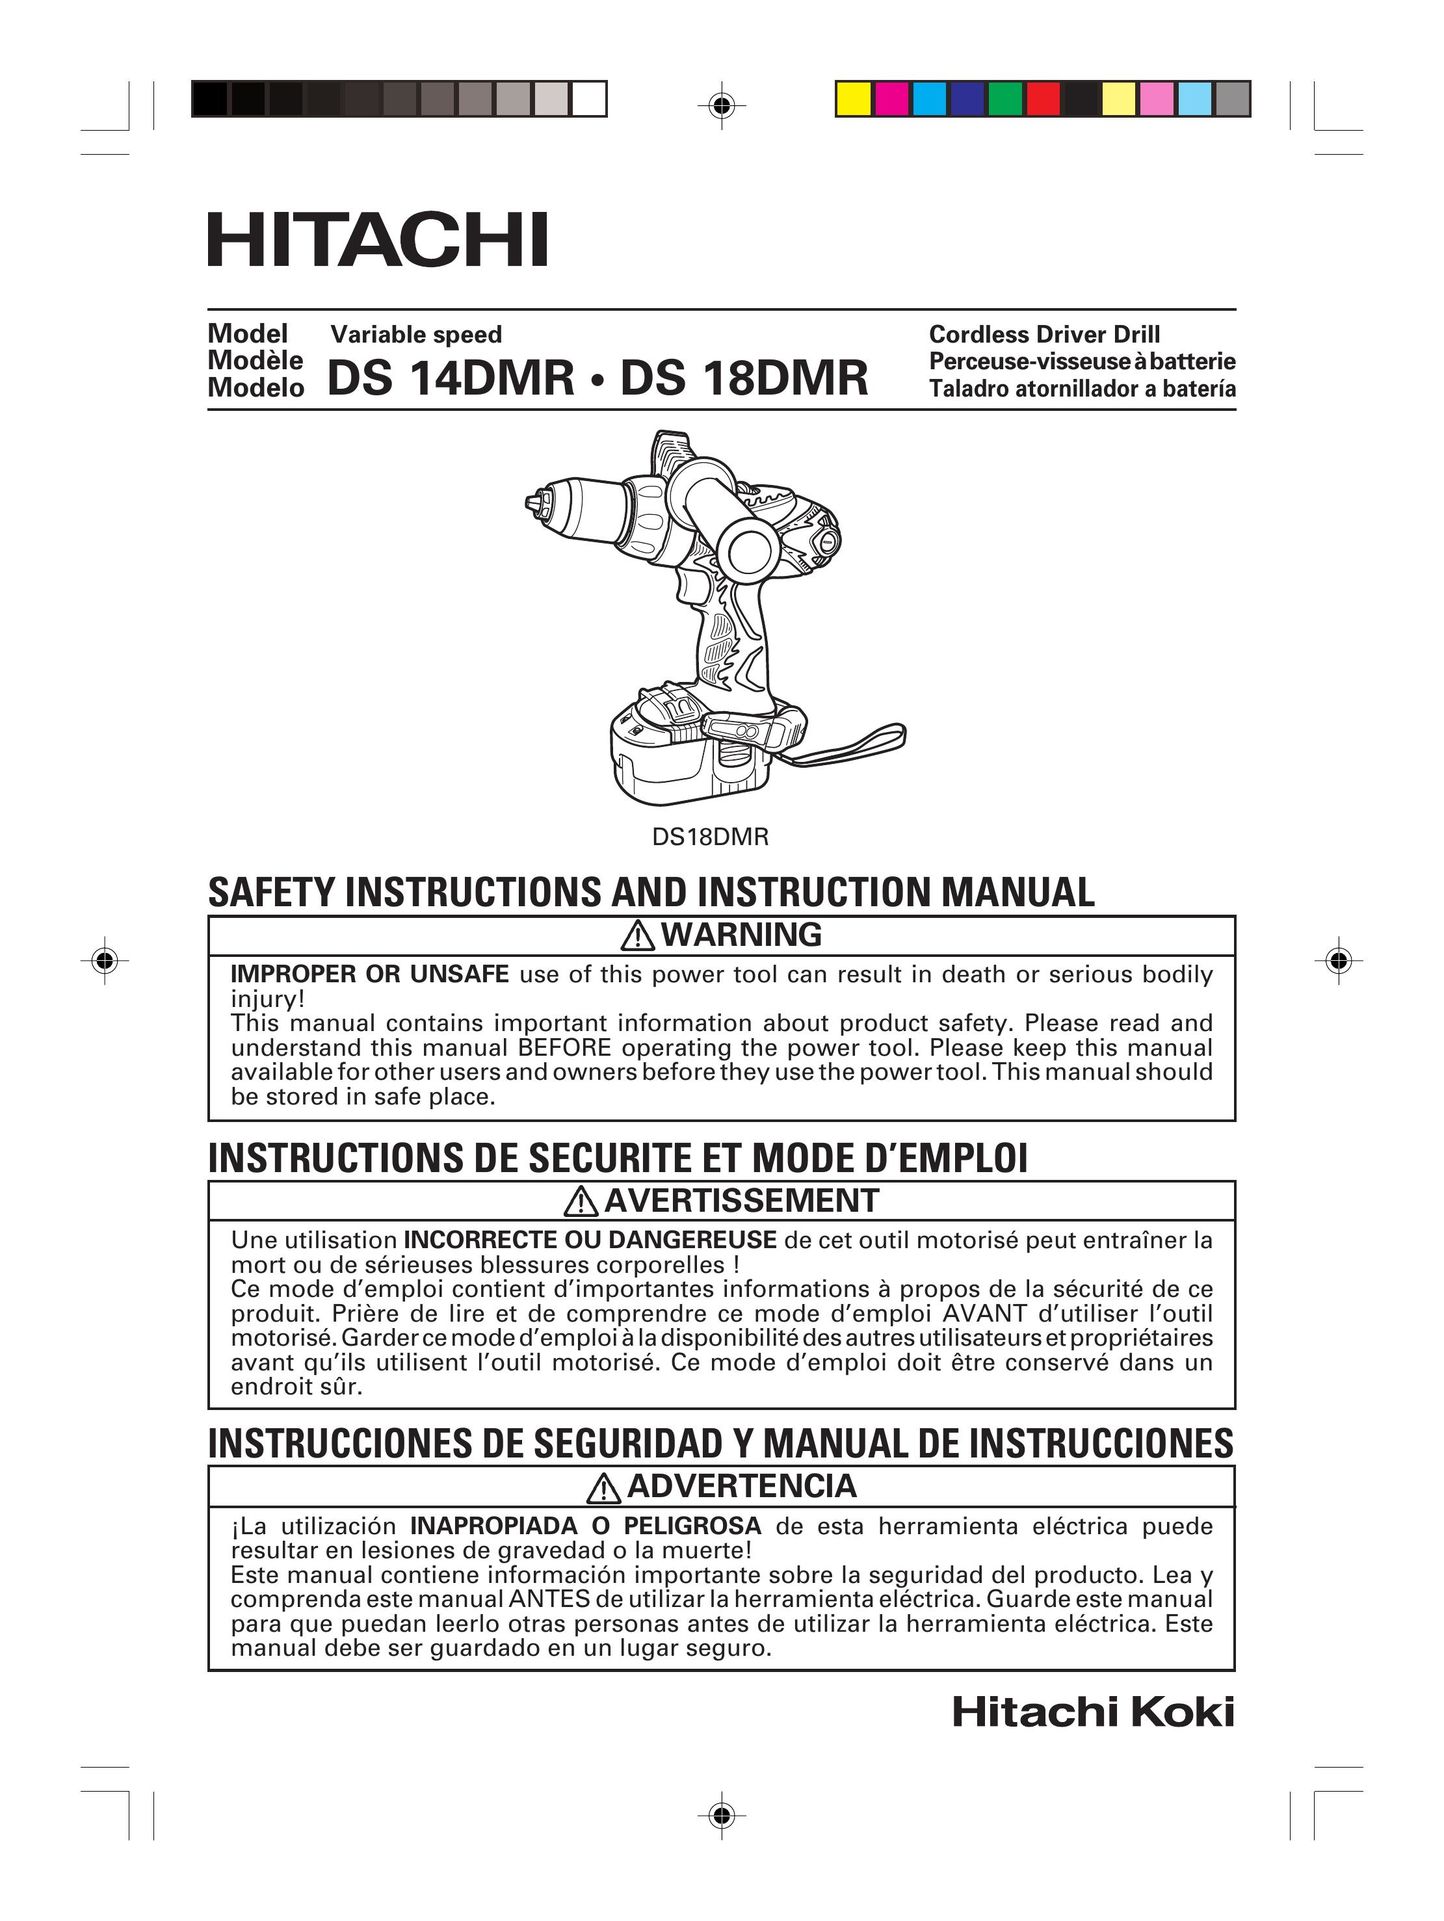 Hitachi DS 18DMR Drill User Manual